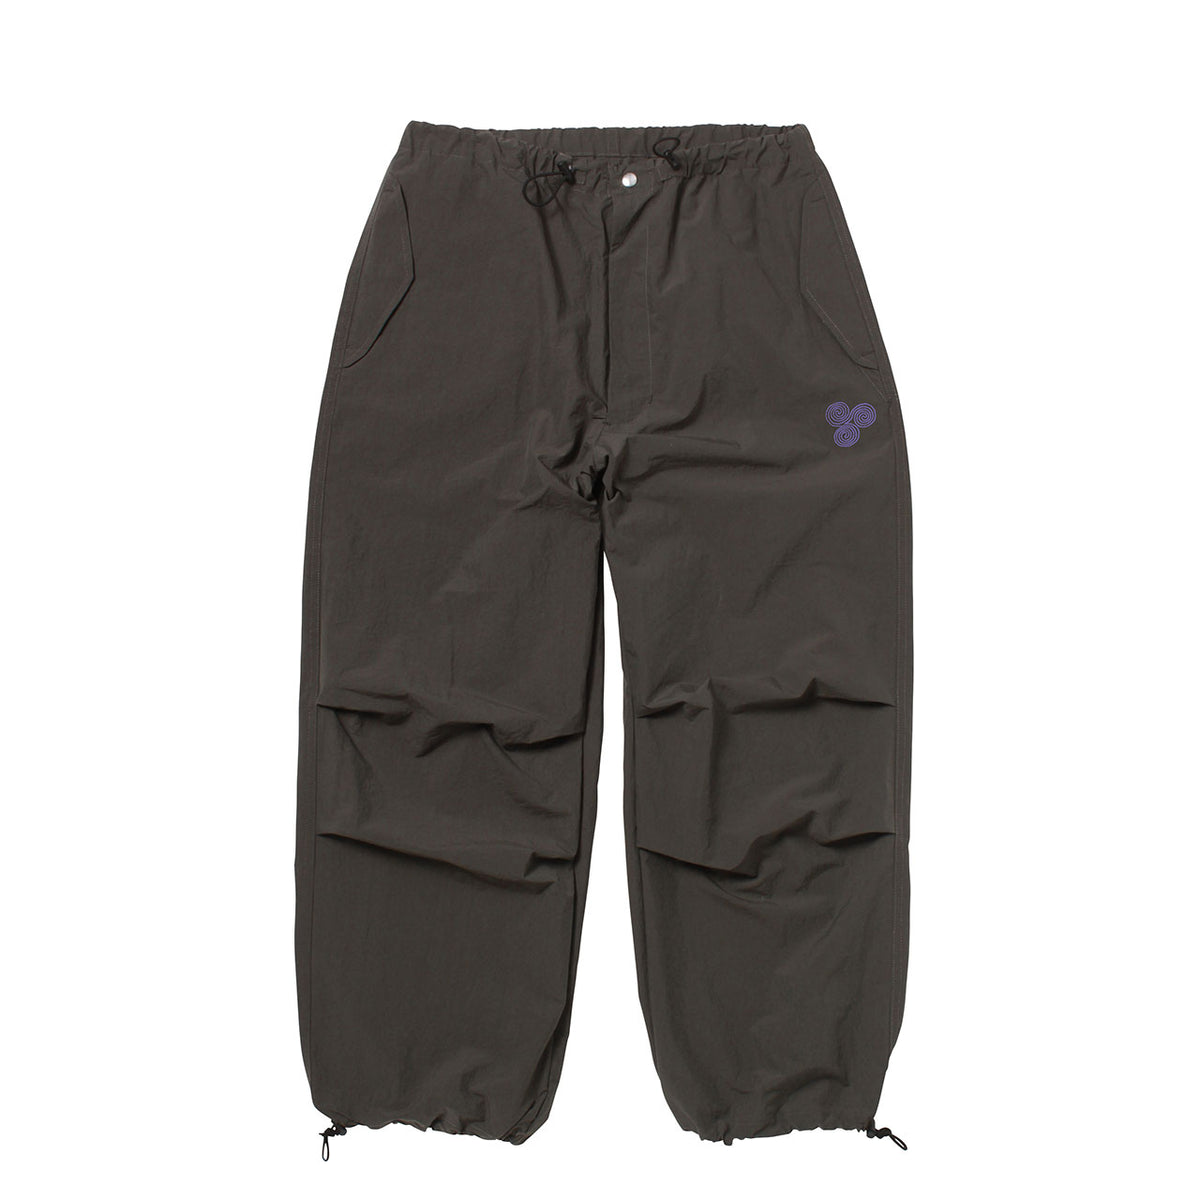 sayhello/no army nylon pants